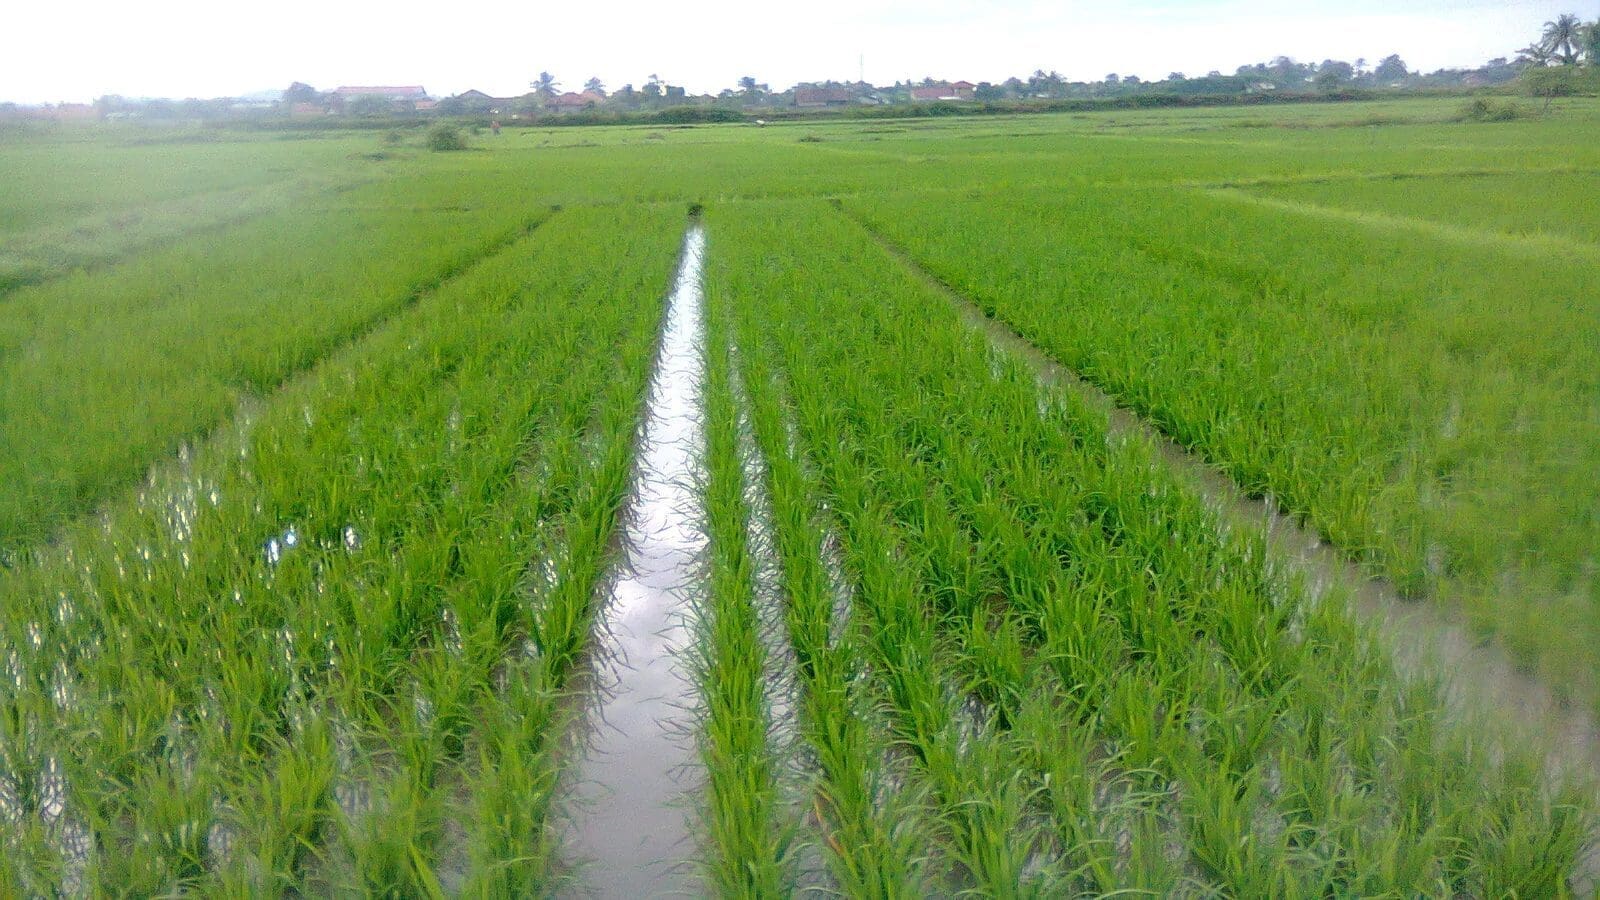 Zanzibar forecast a threefold increase in rice production as irrigation efforts start to bear fruit